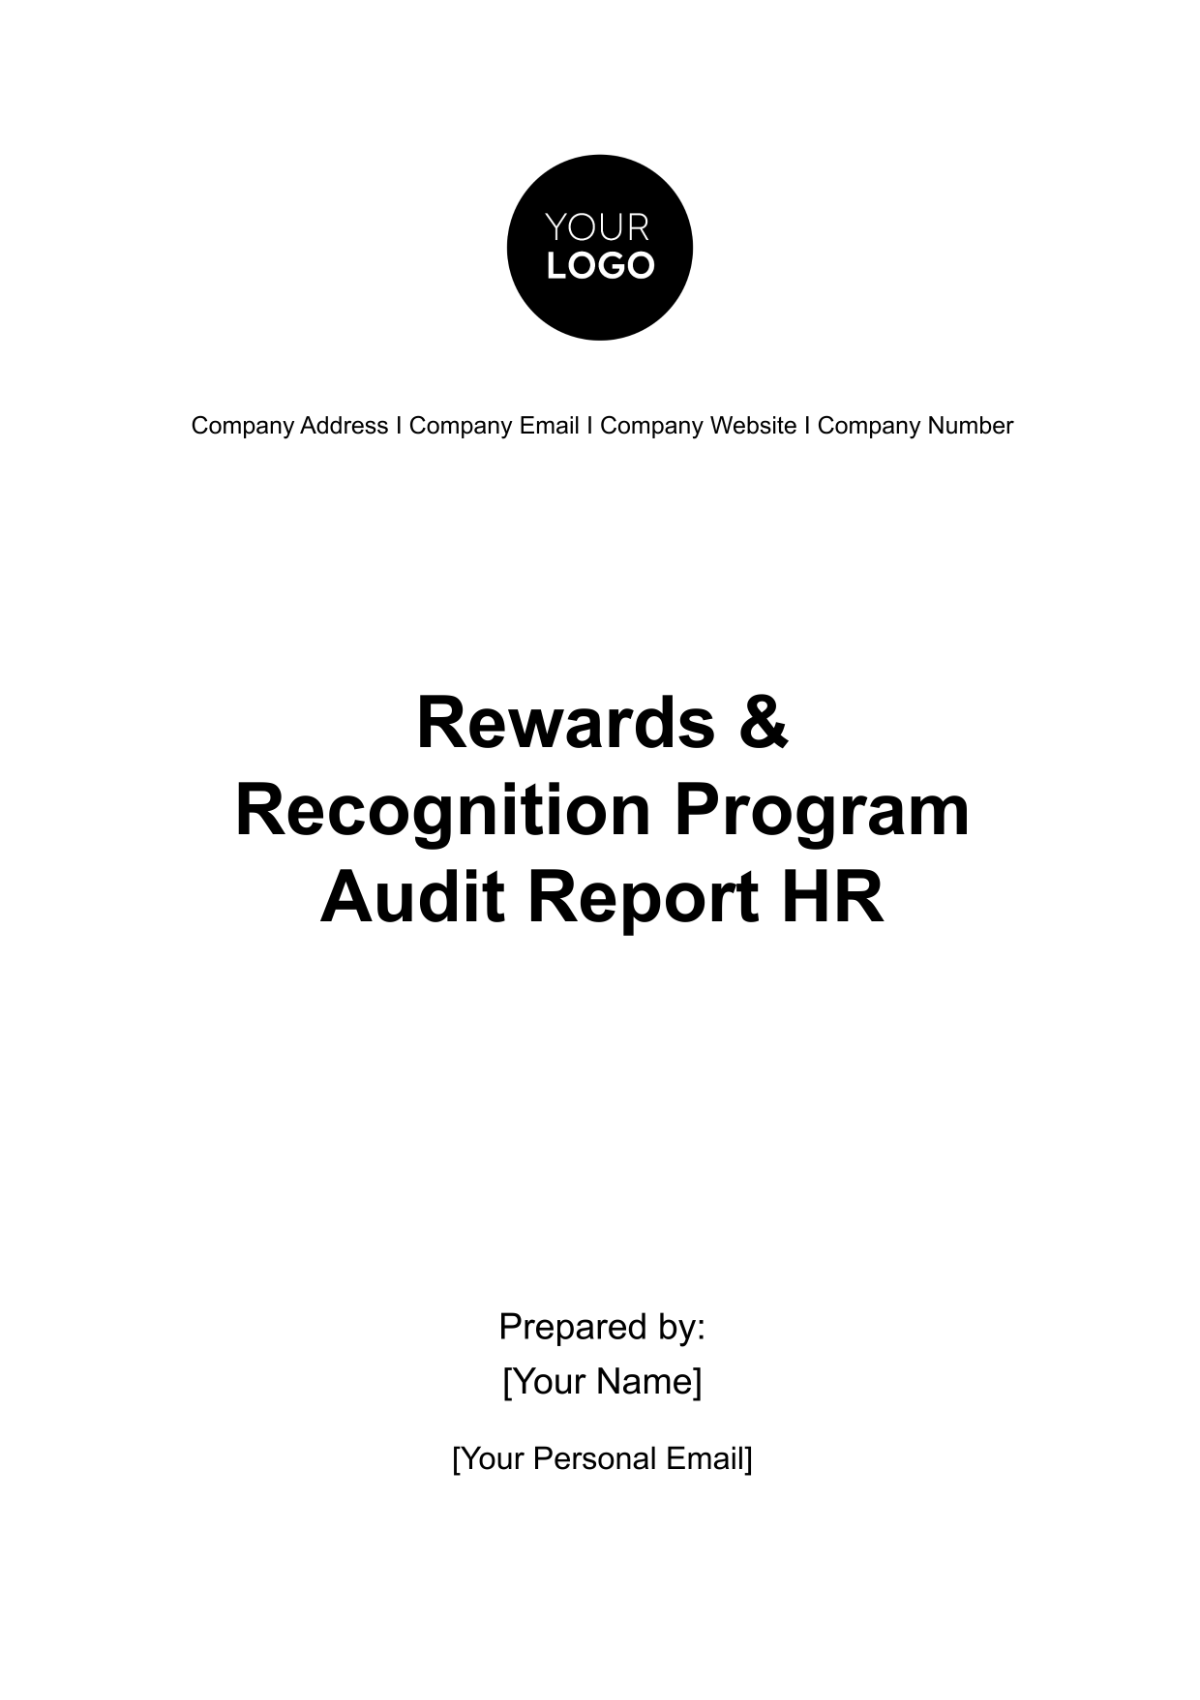 Free Rewards & Recognition Program Audit Report HR Template